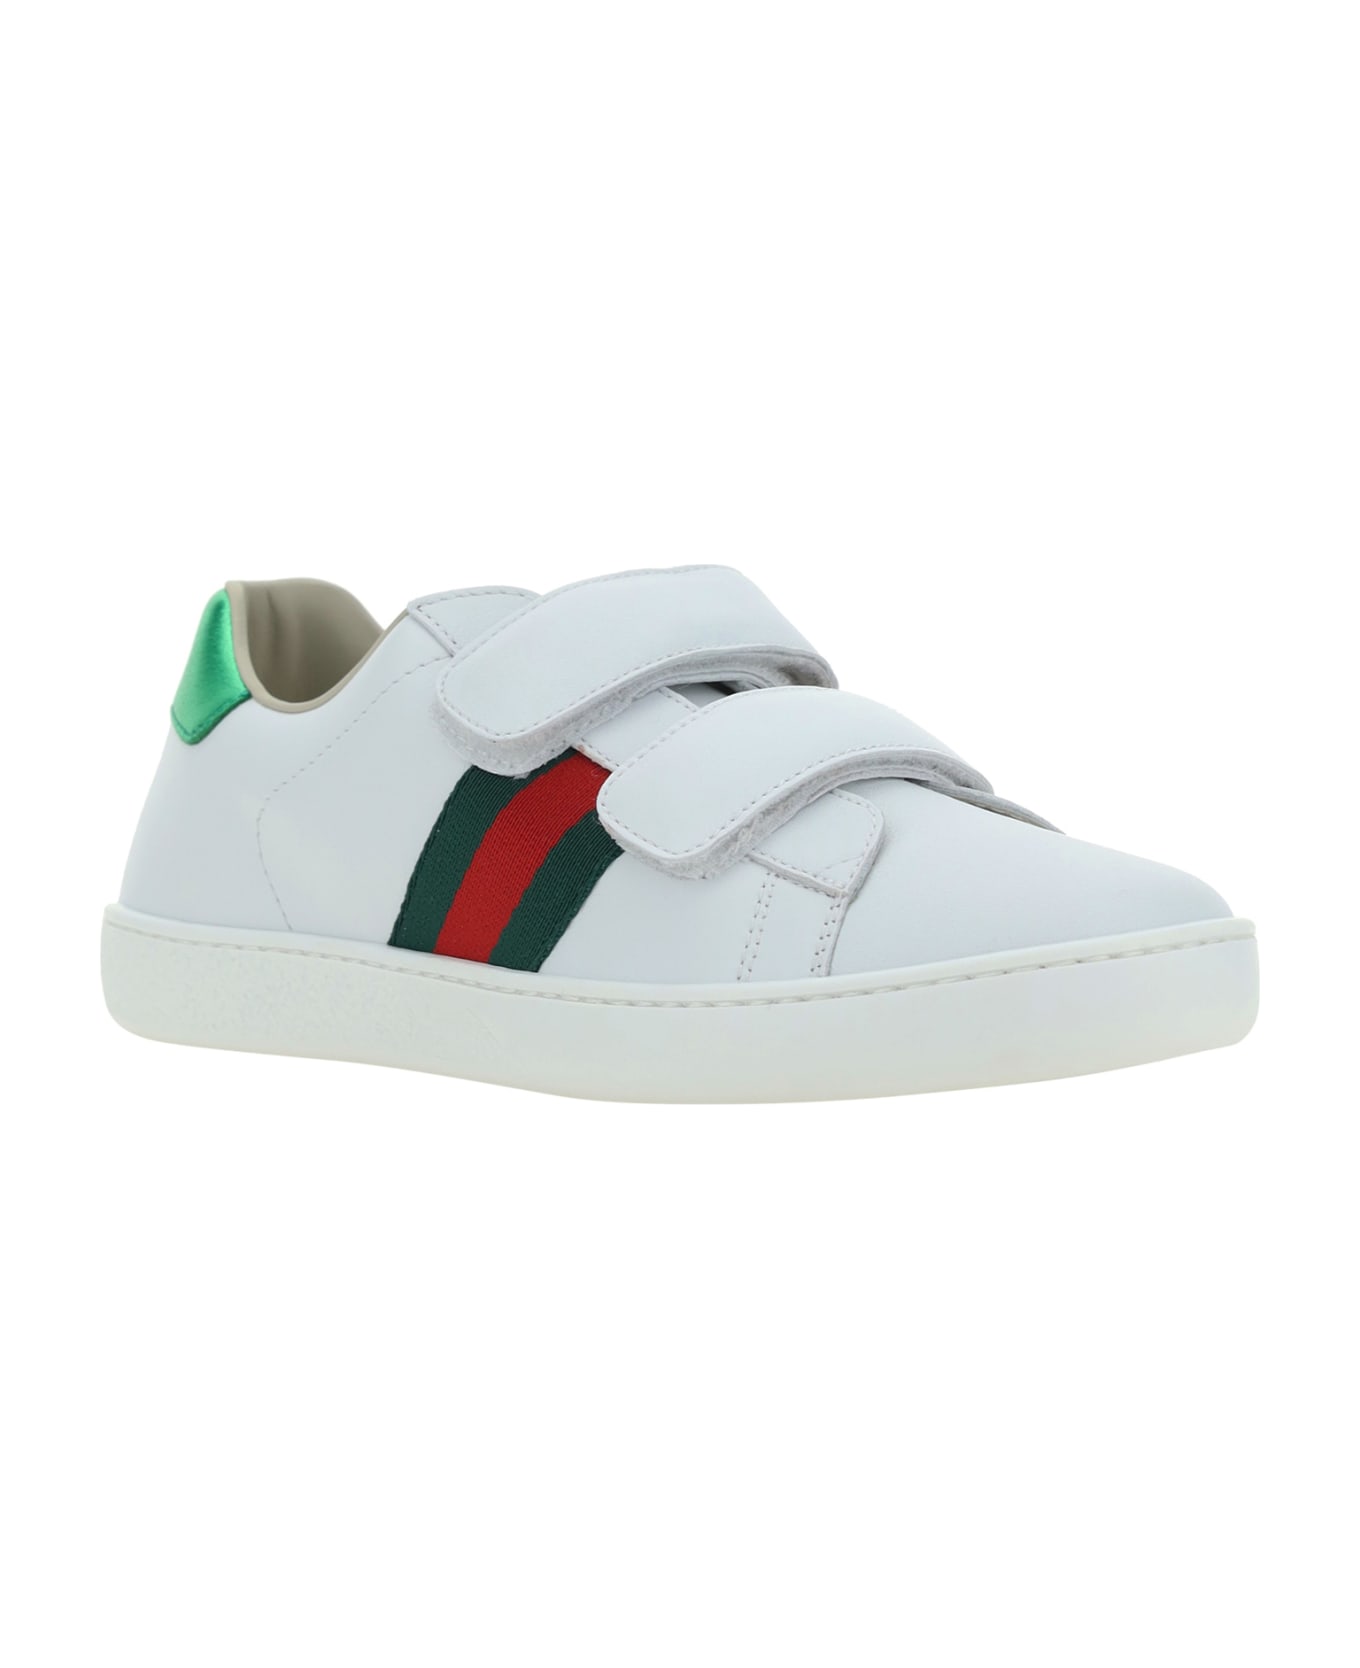 Gucci Sneakers For Boy - White シューズ